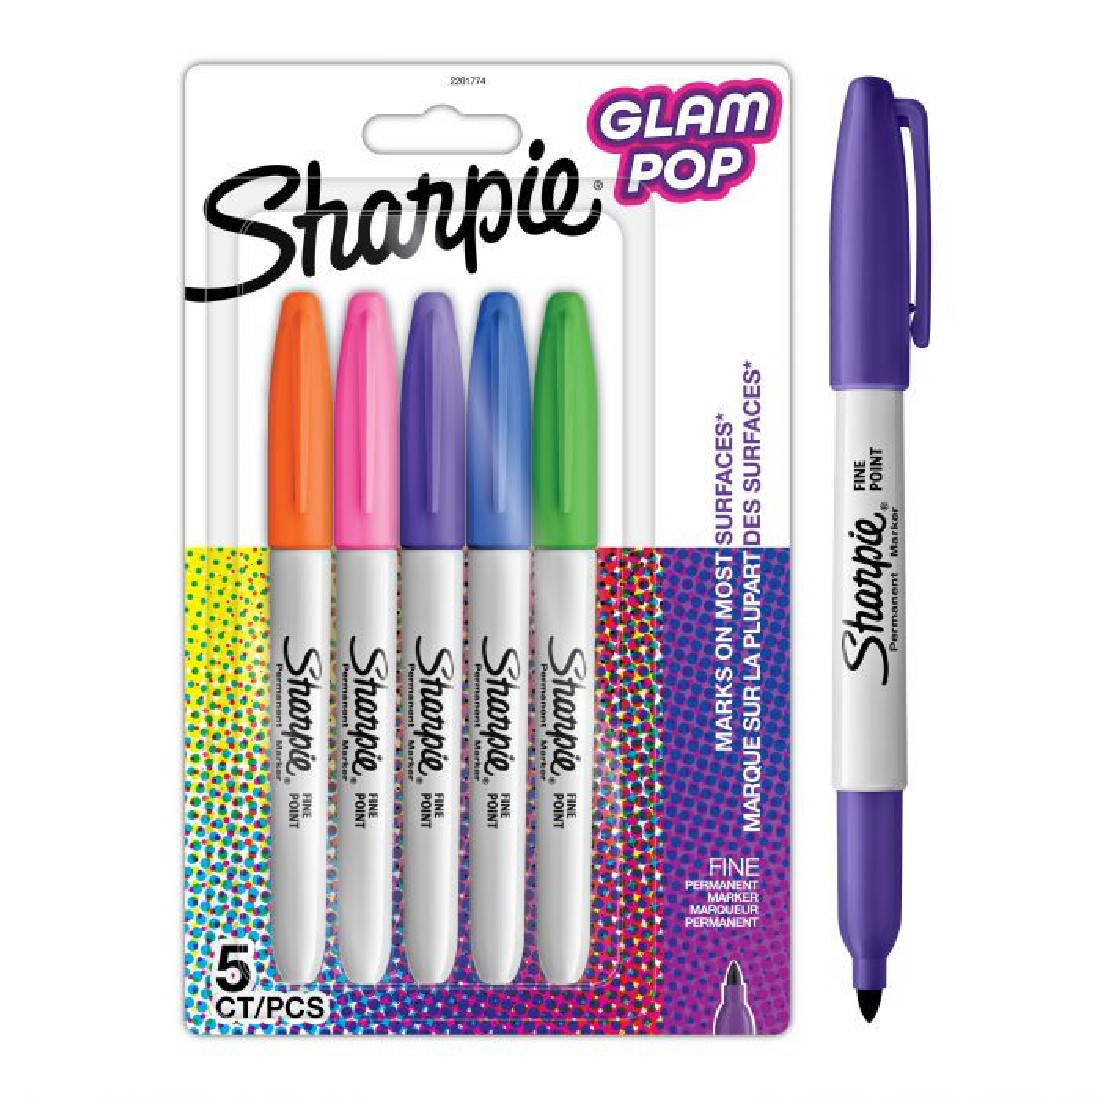 Sharpie Glam Pop Permanent Markers, 5 pcs Fine Point 2201774